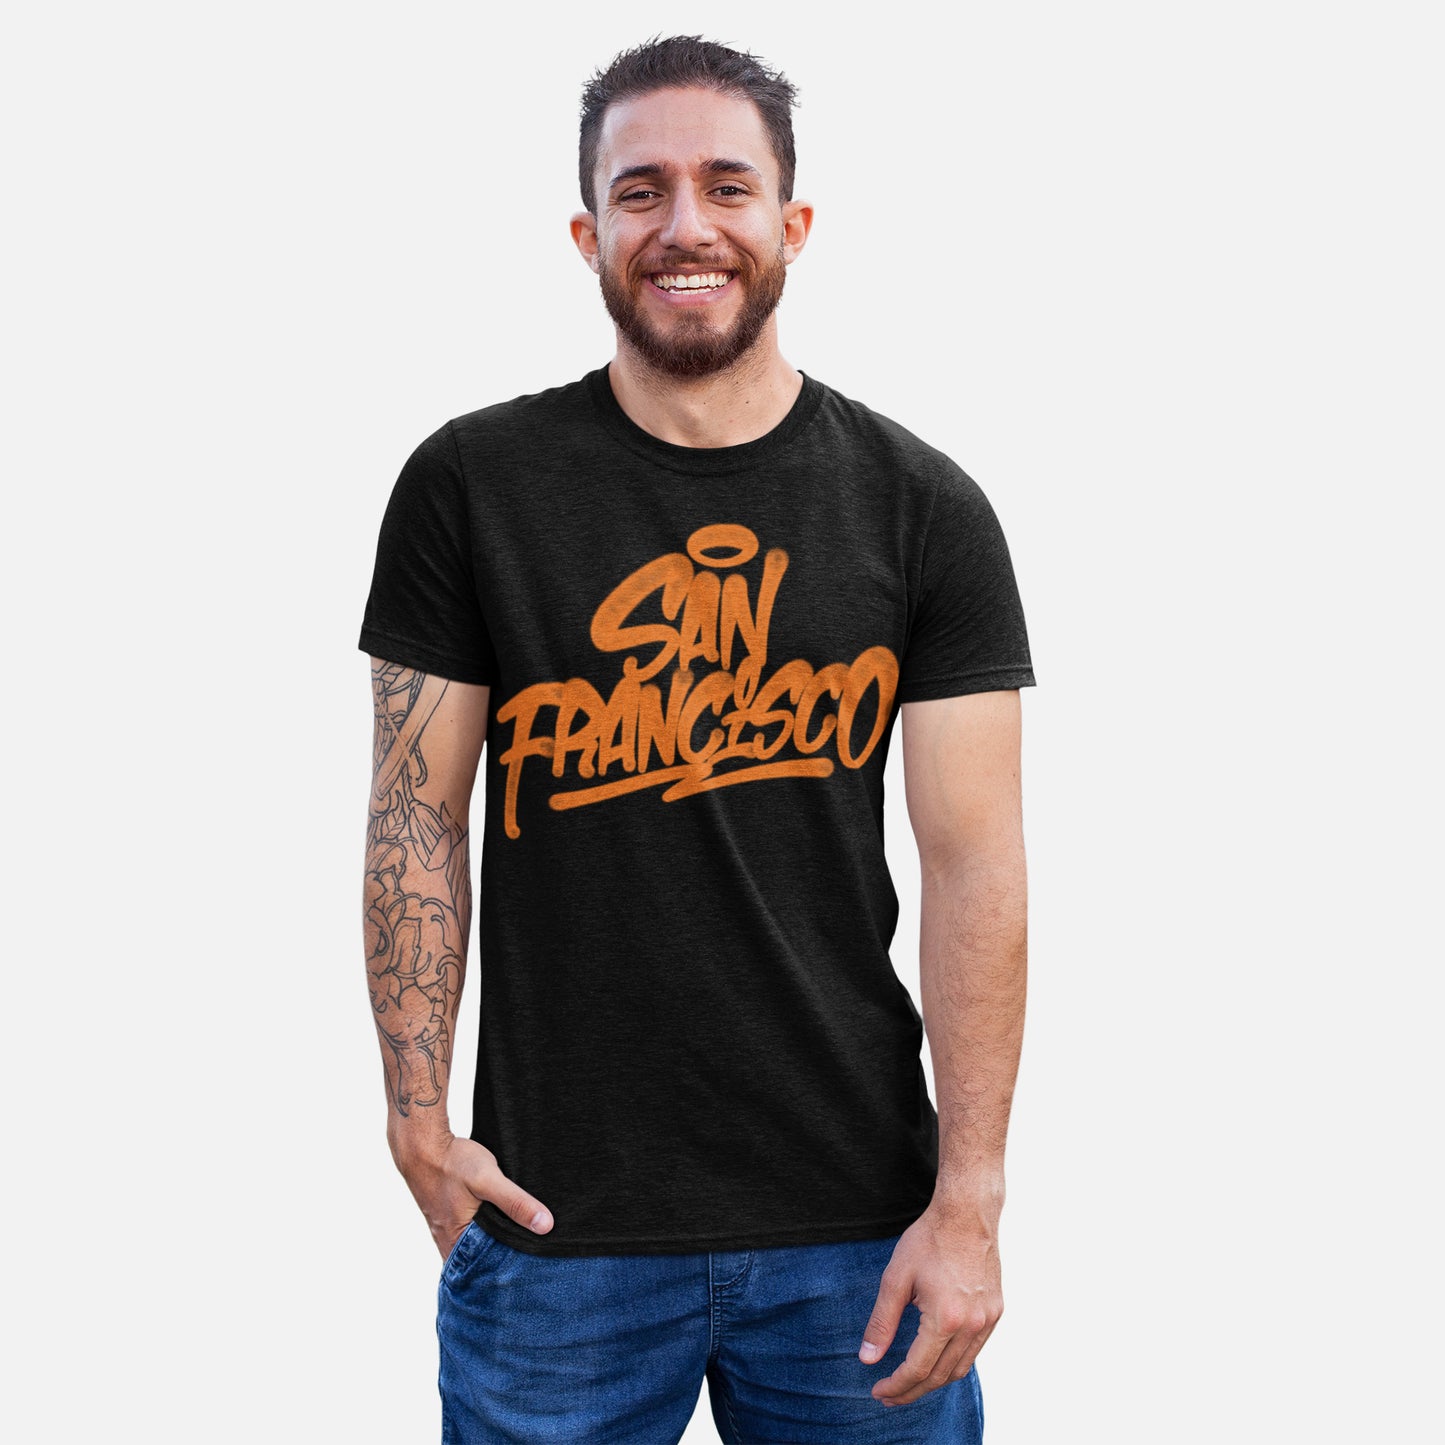 San Francisco Handstyle T-shirt